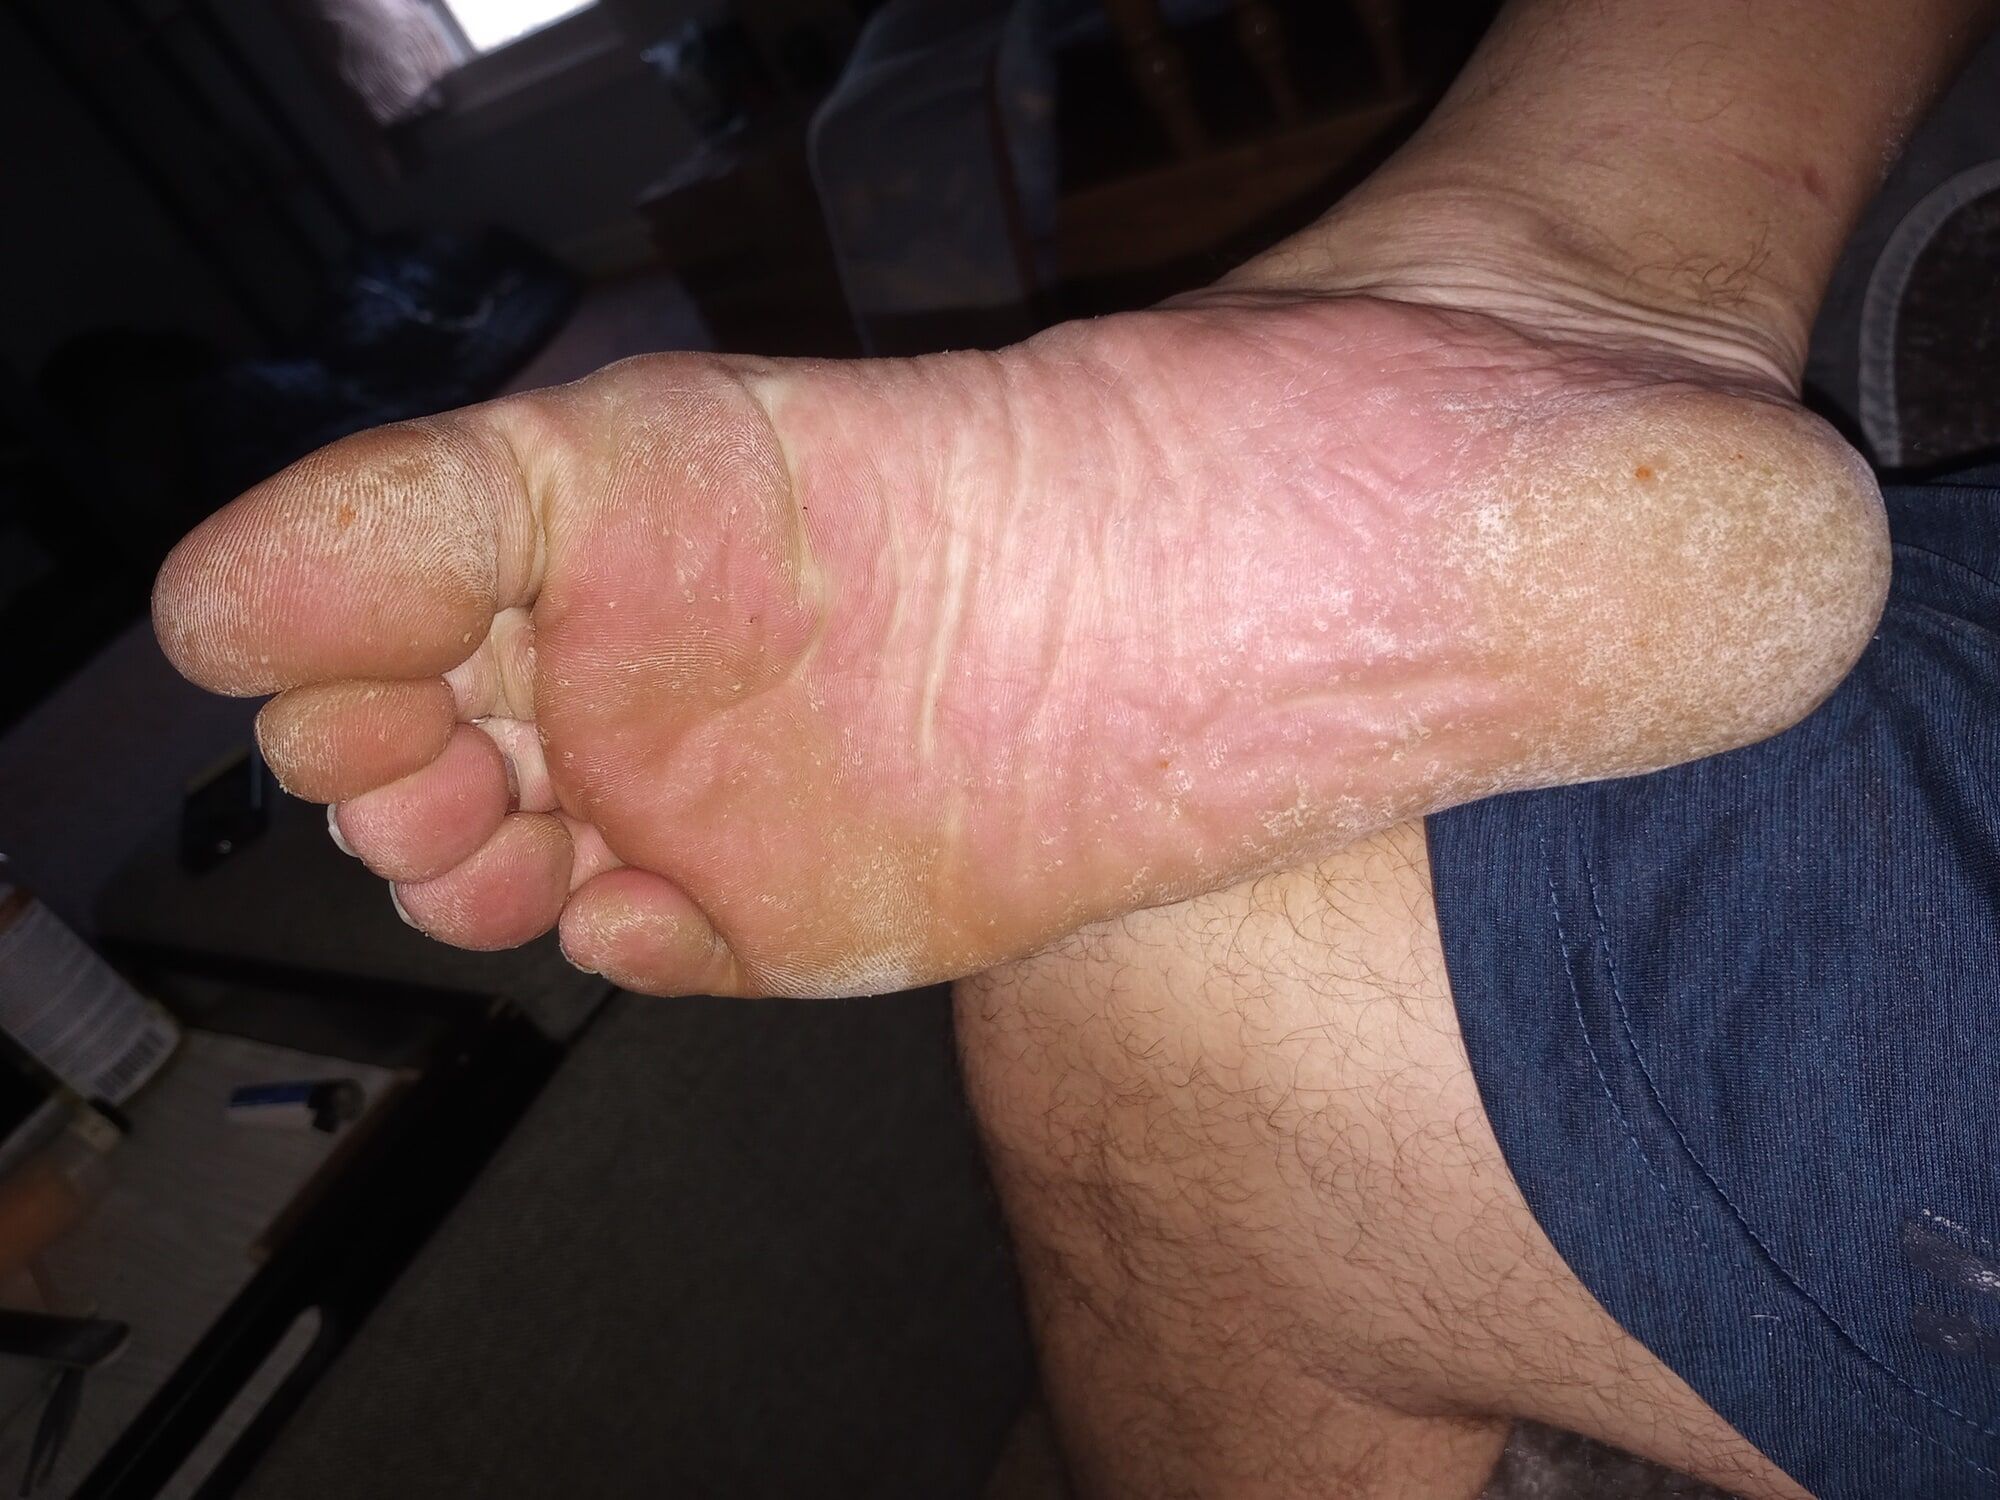 My rough Dirty Male Feet #3